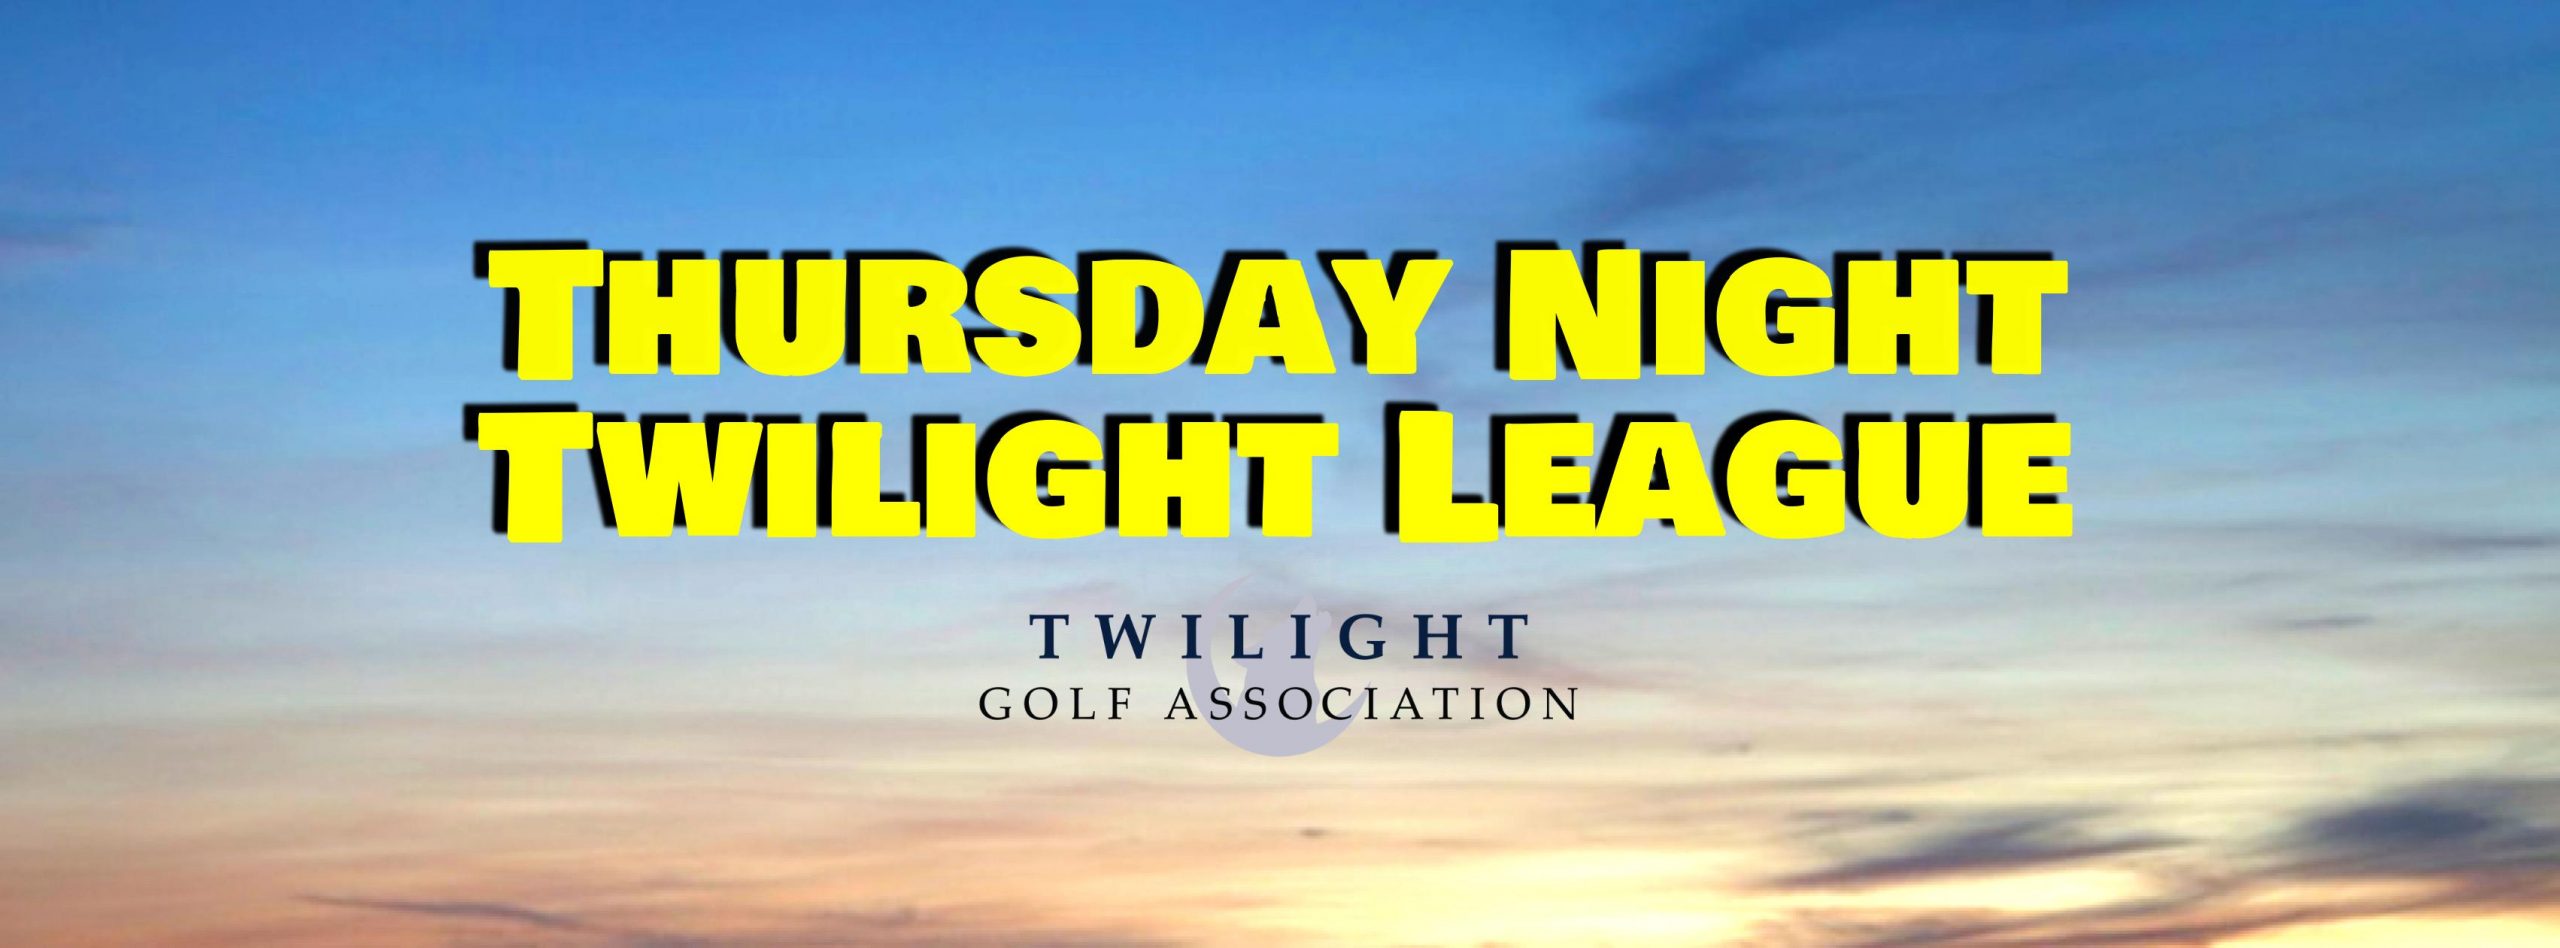 Thursday Twilight League at Waverly Woods Golf Club